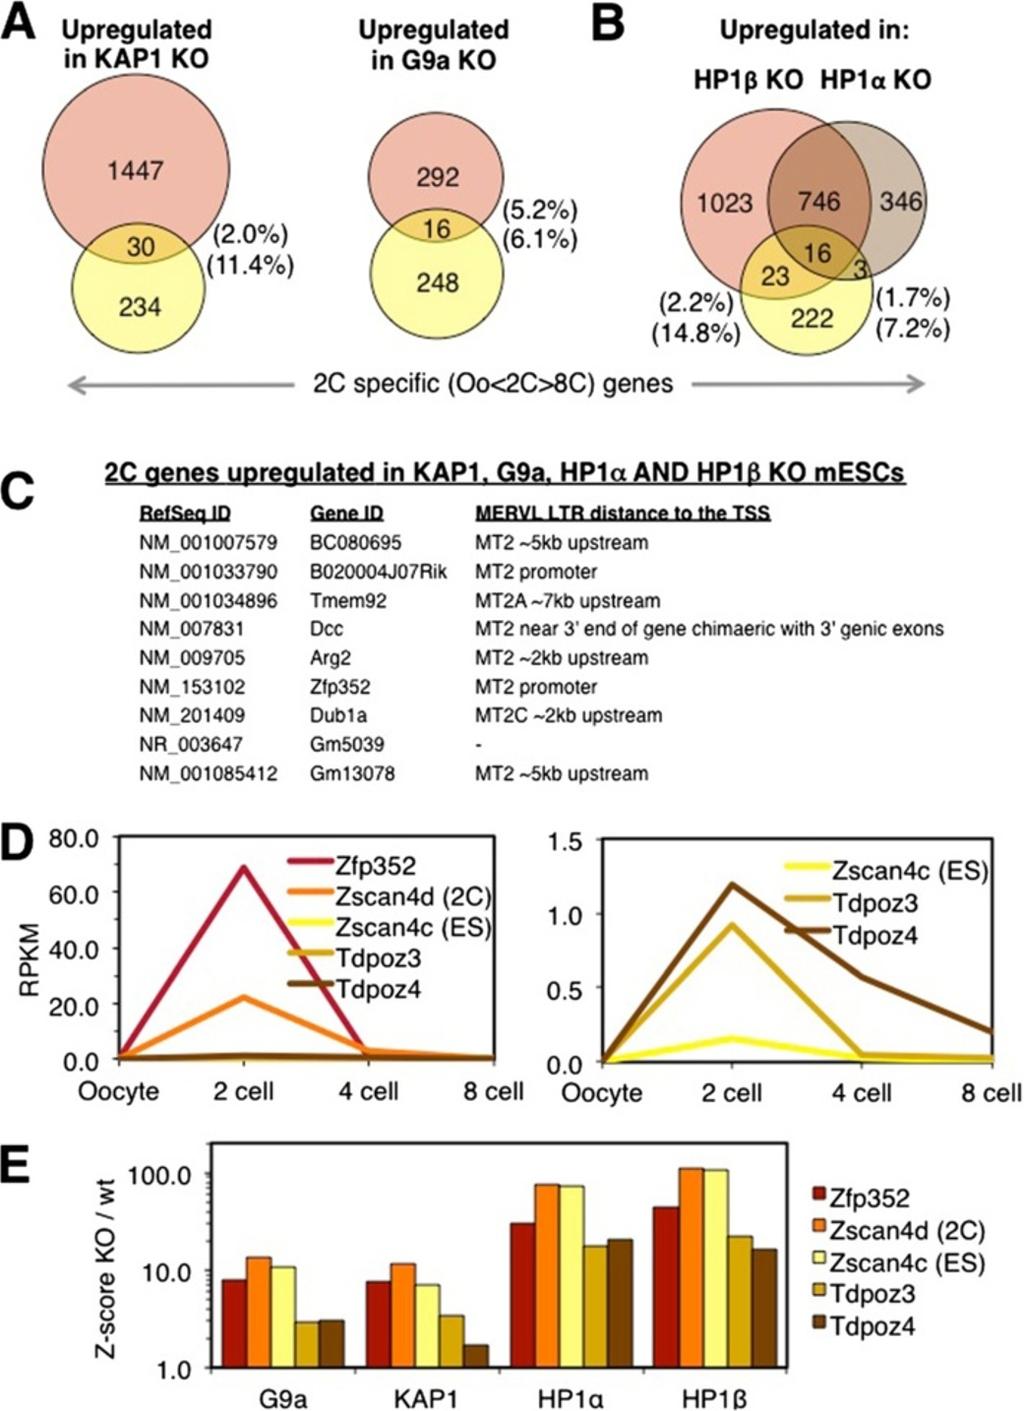 Maksakova et al. Epigenetics & Chromatin 2013, 6:15 Page 10 of 16 Figure 6 Two-cell embryo-specific genes are induced in HP1α, HP1β, KAP1 and G9a KO mescs.